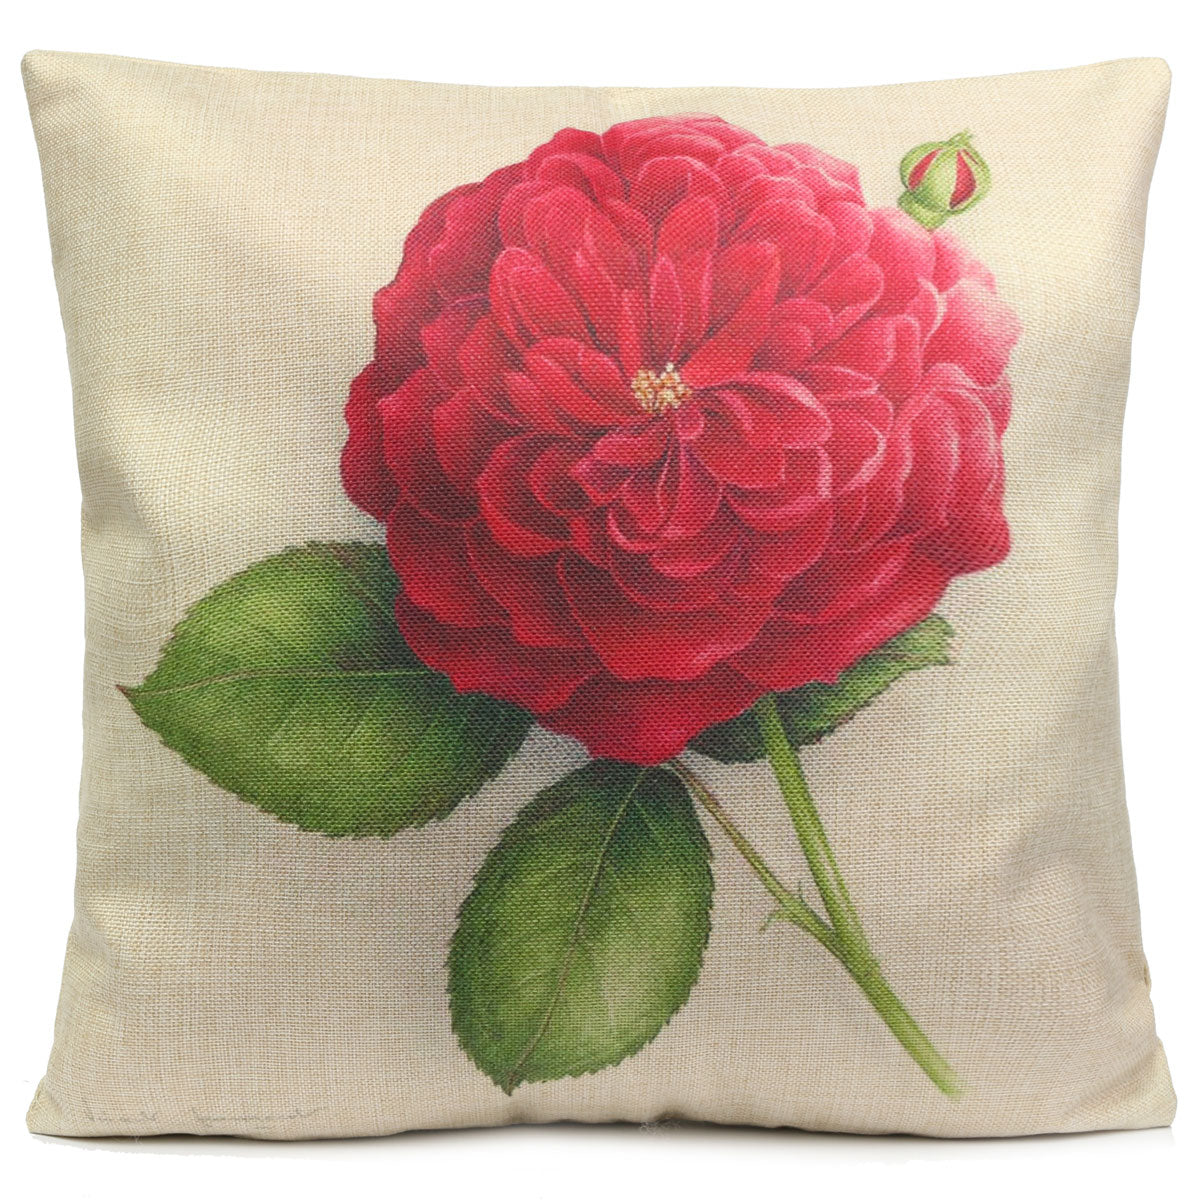 Rose Flowers Cotton Linen Throw Pillow Case Sofa Bed Car Cushion Cover Home Decor